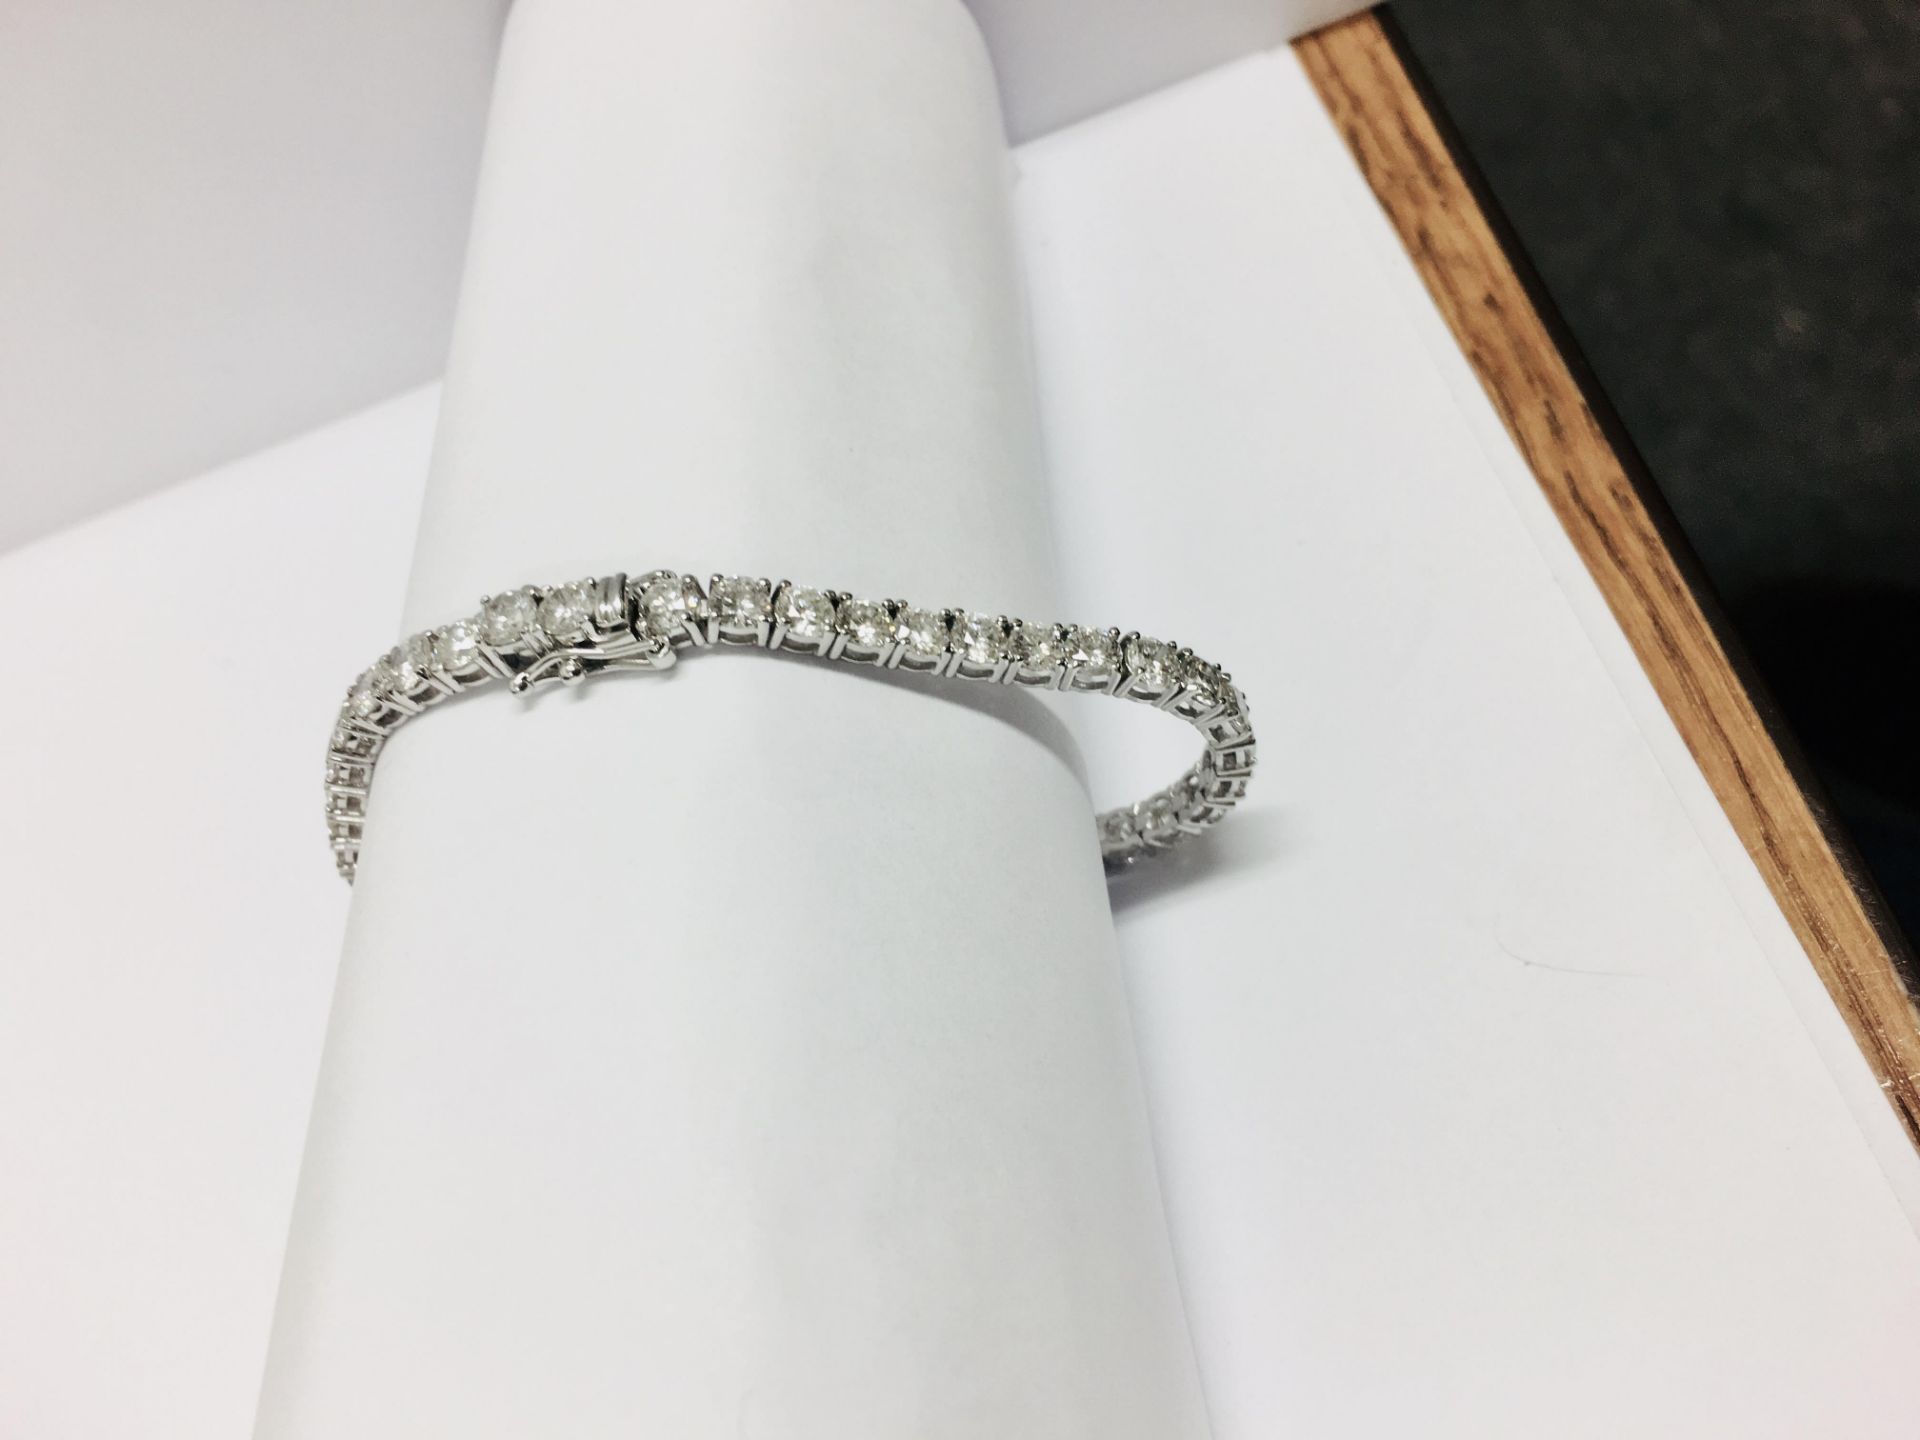 10.00ct Diamond tennis bracelet set with brilliant cut diamonds of I/J colour, si2-3 clarity. All - Image 6 of 6